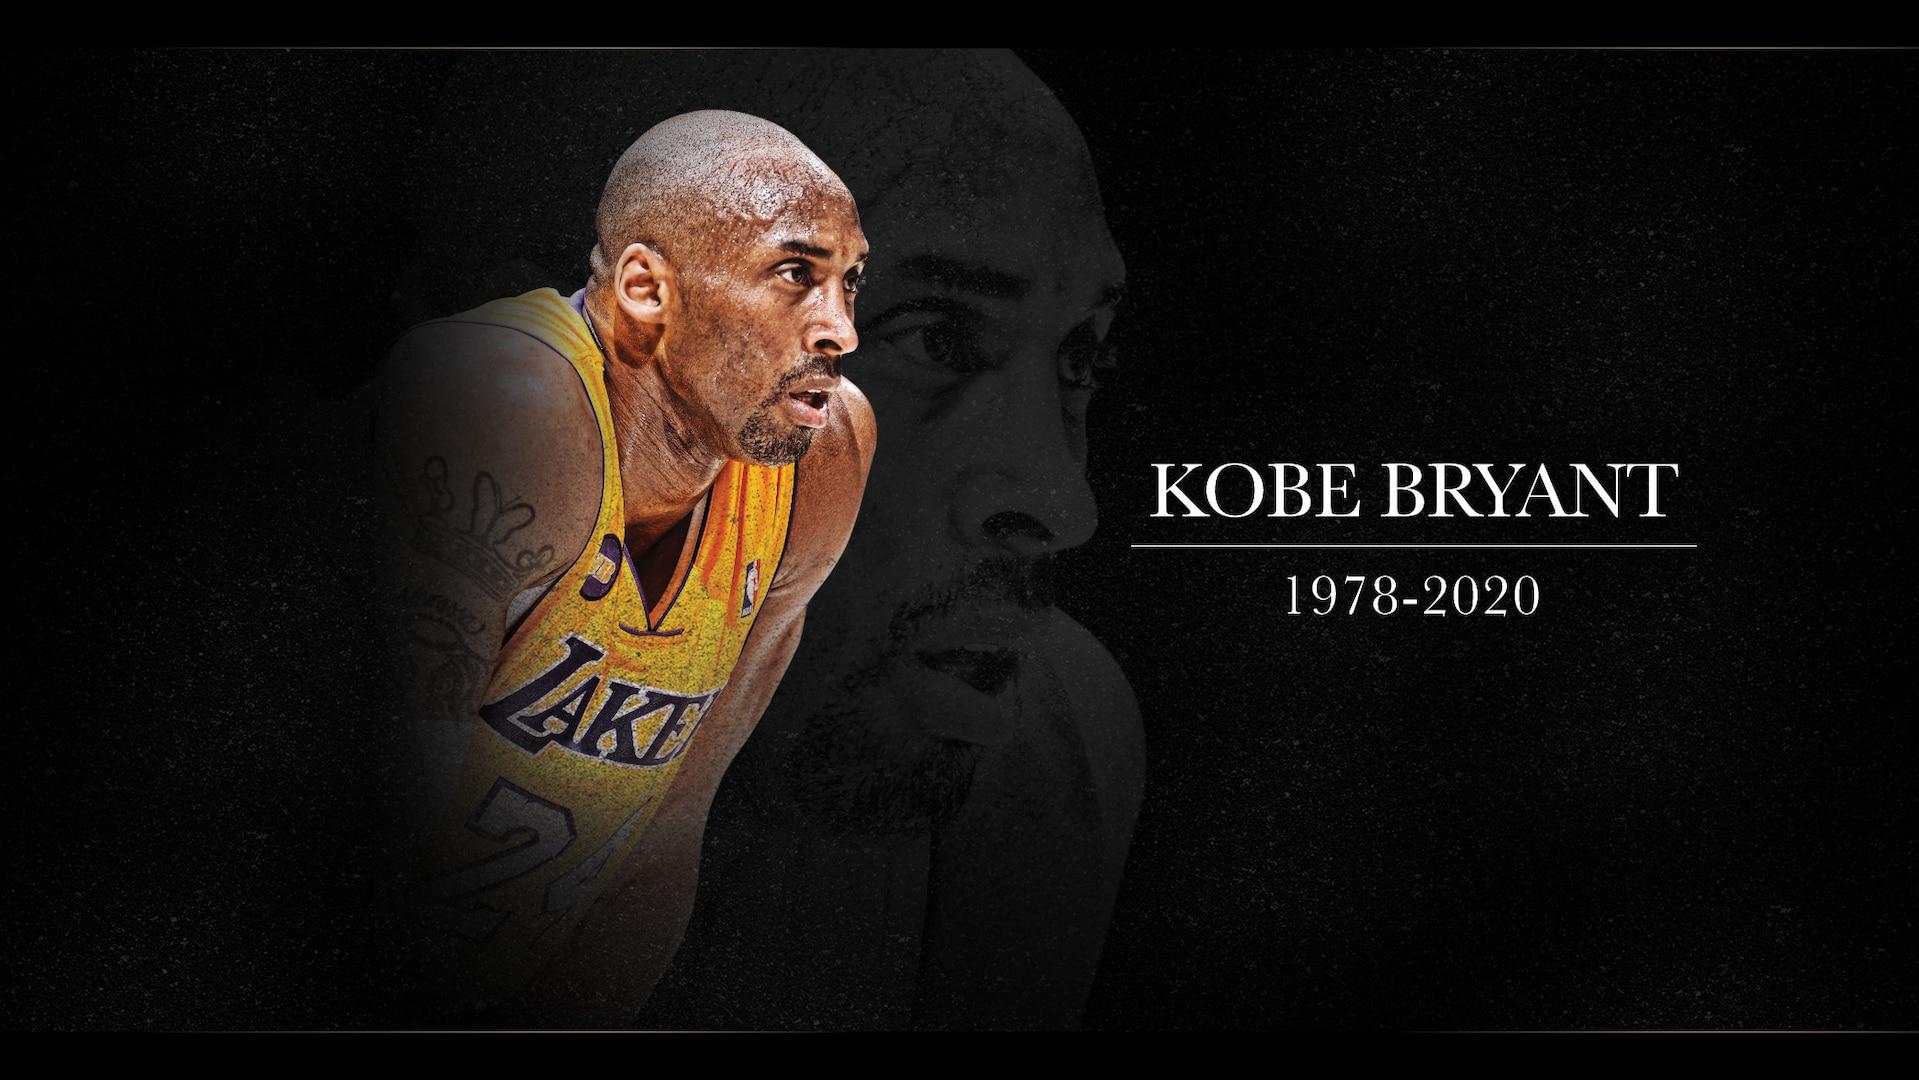 Los Angeles Lakers legend Kobe Bryant dies at 41 in helicopter crash